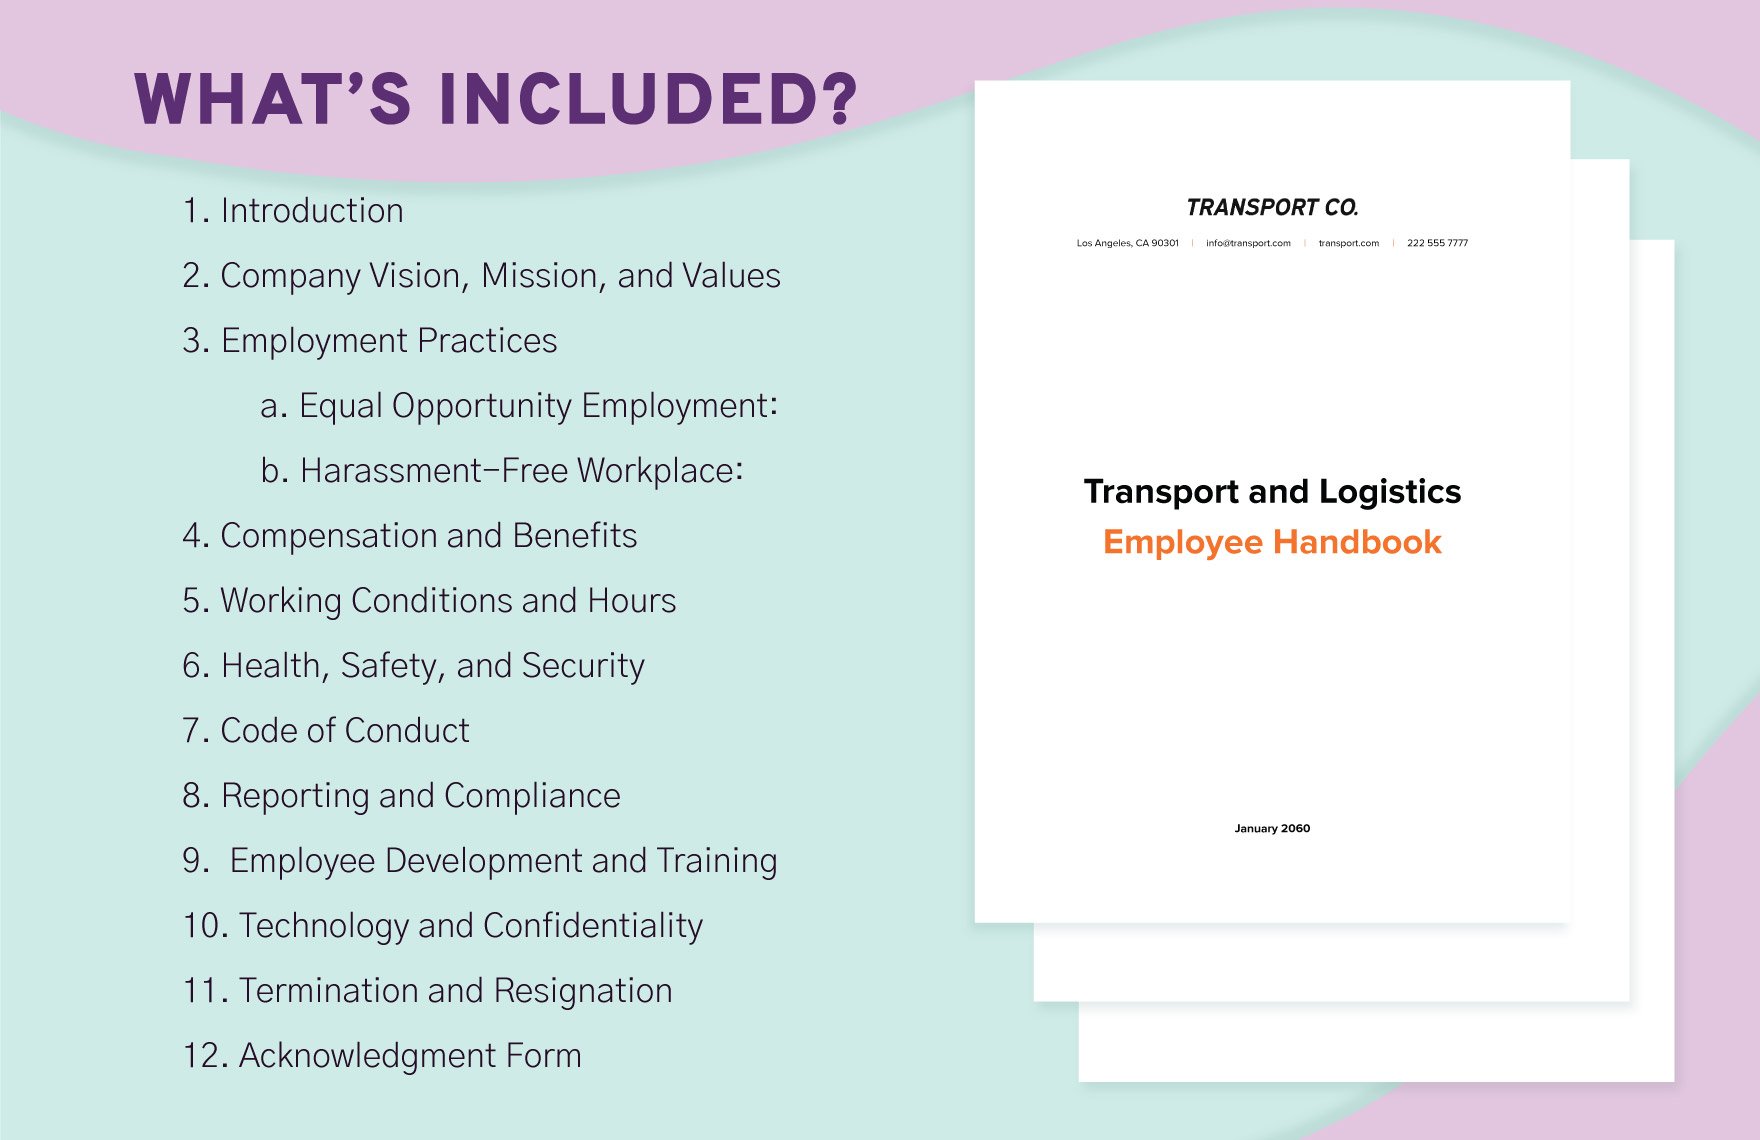 Transport and Logistics Employee Handbook Template